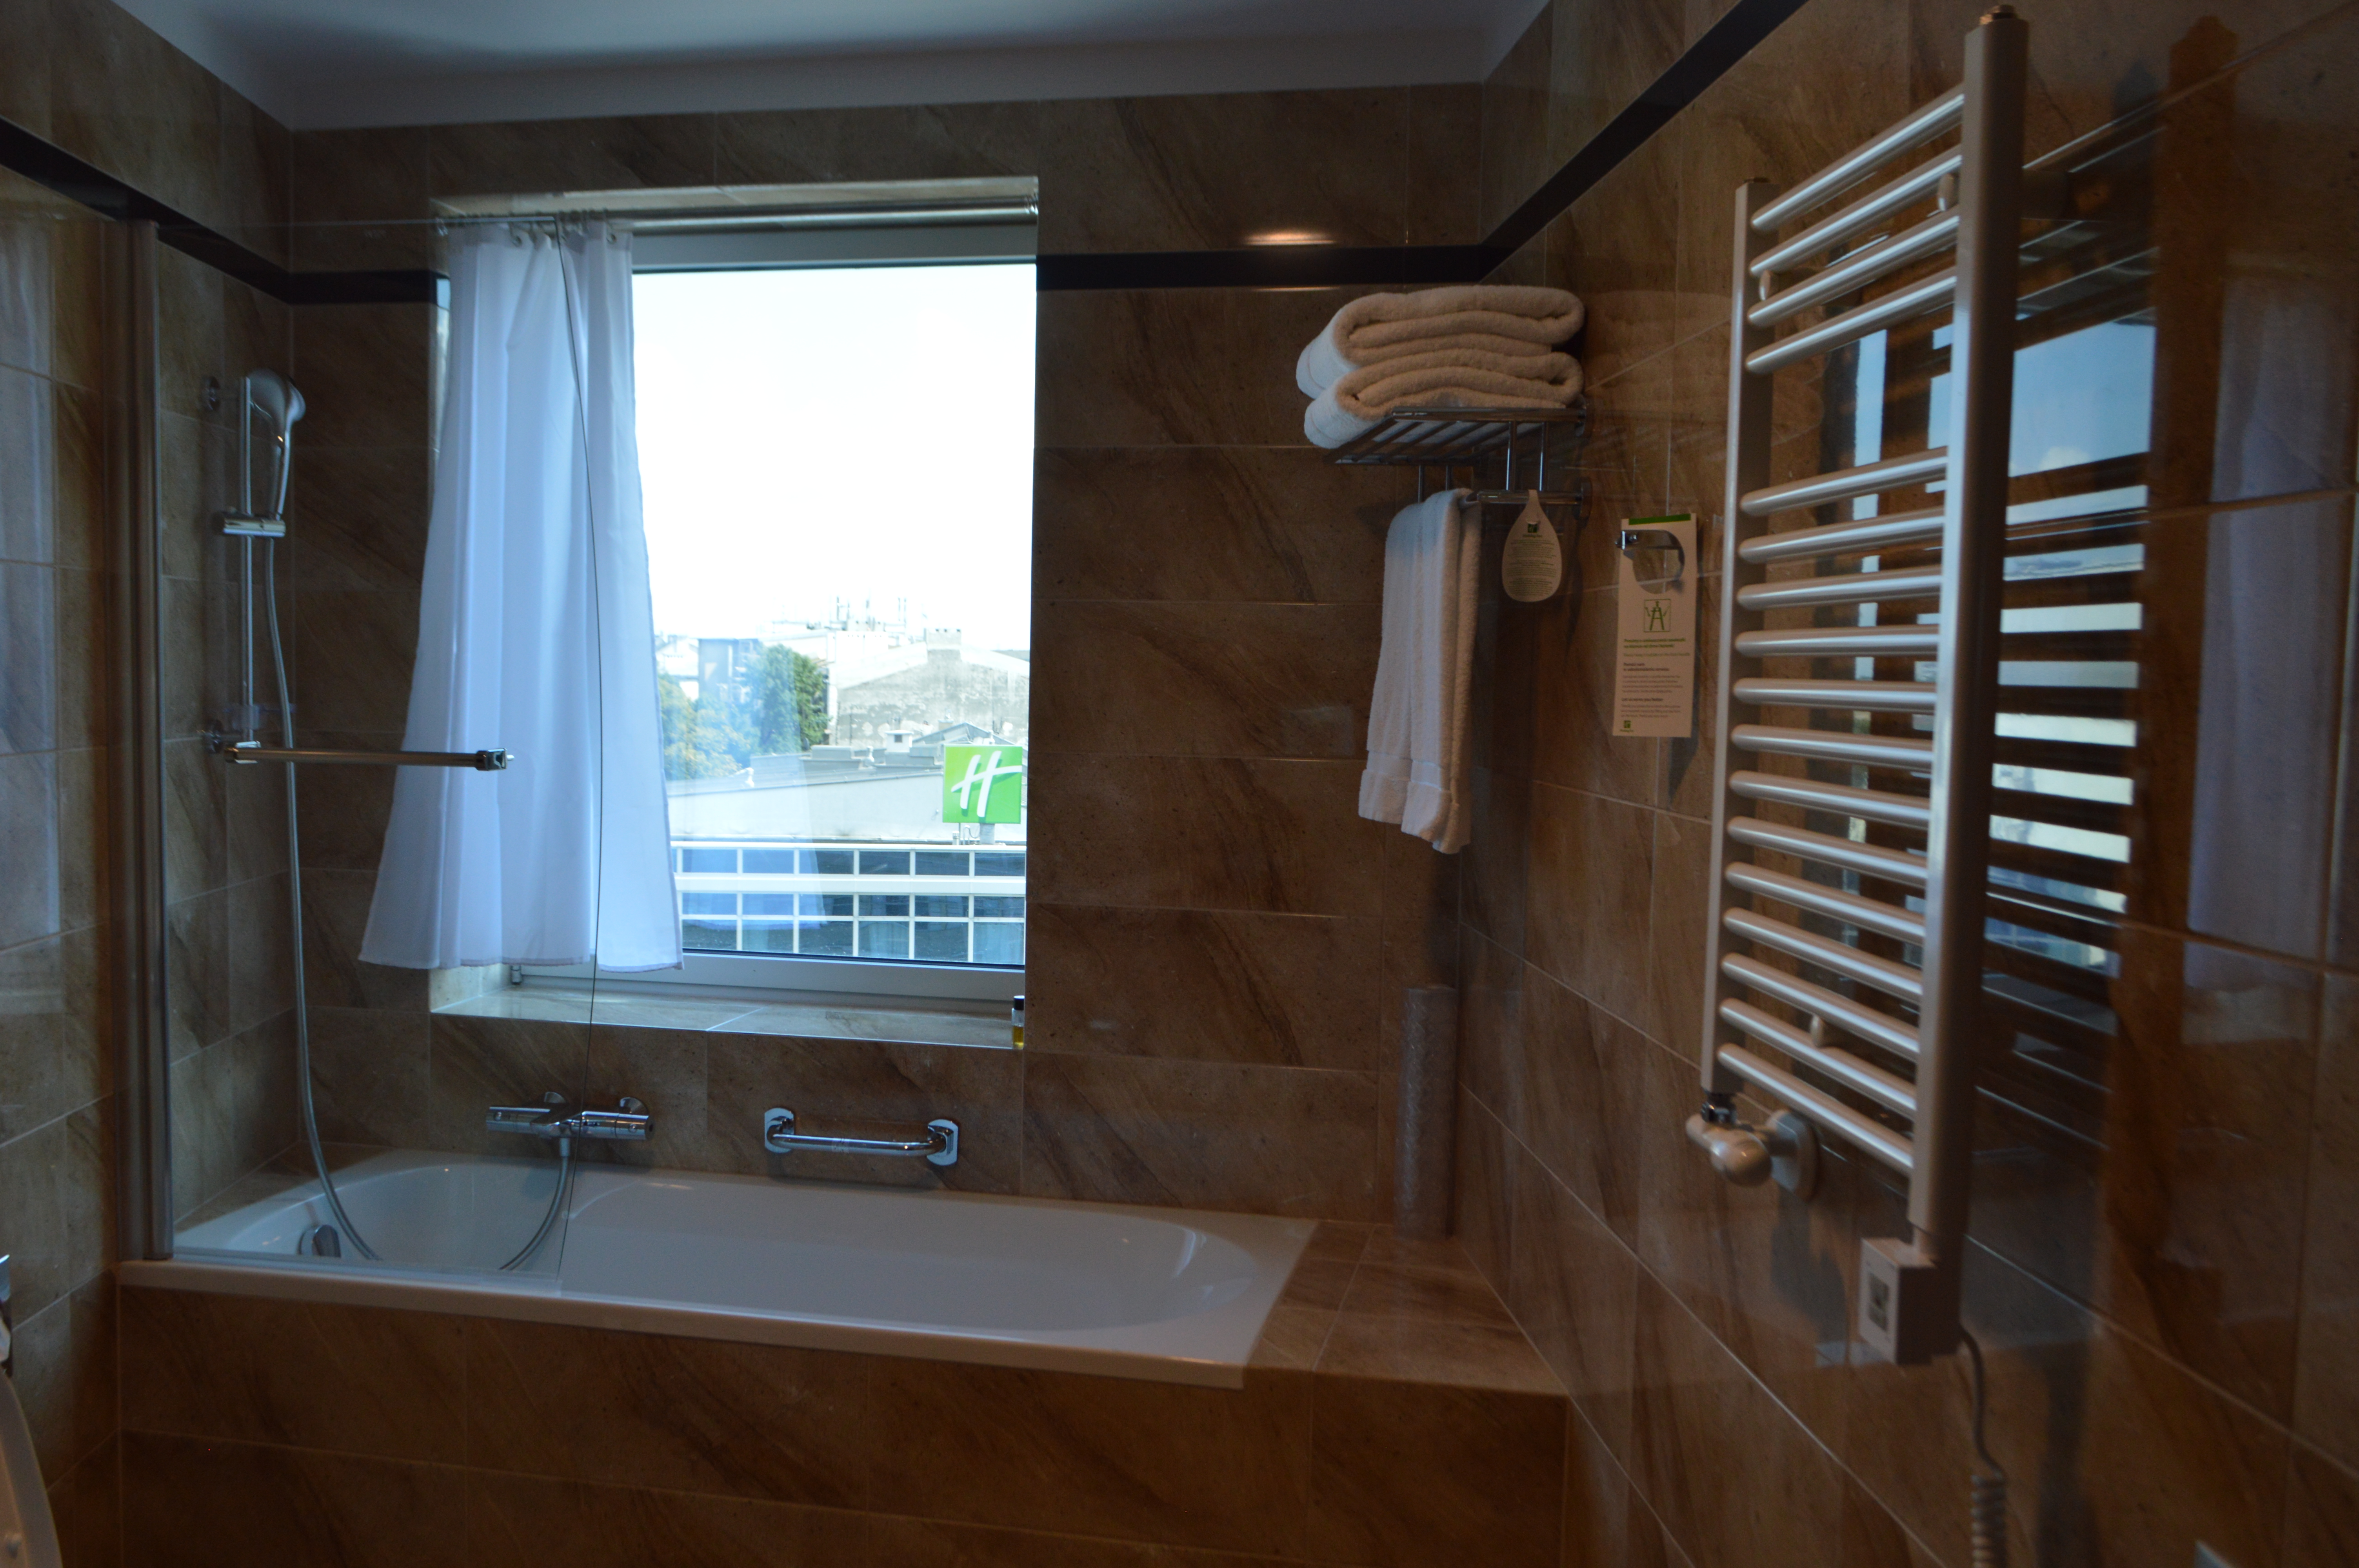 a bathroom with a bathtub and towels